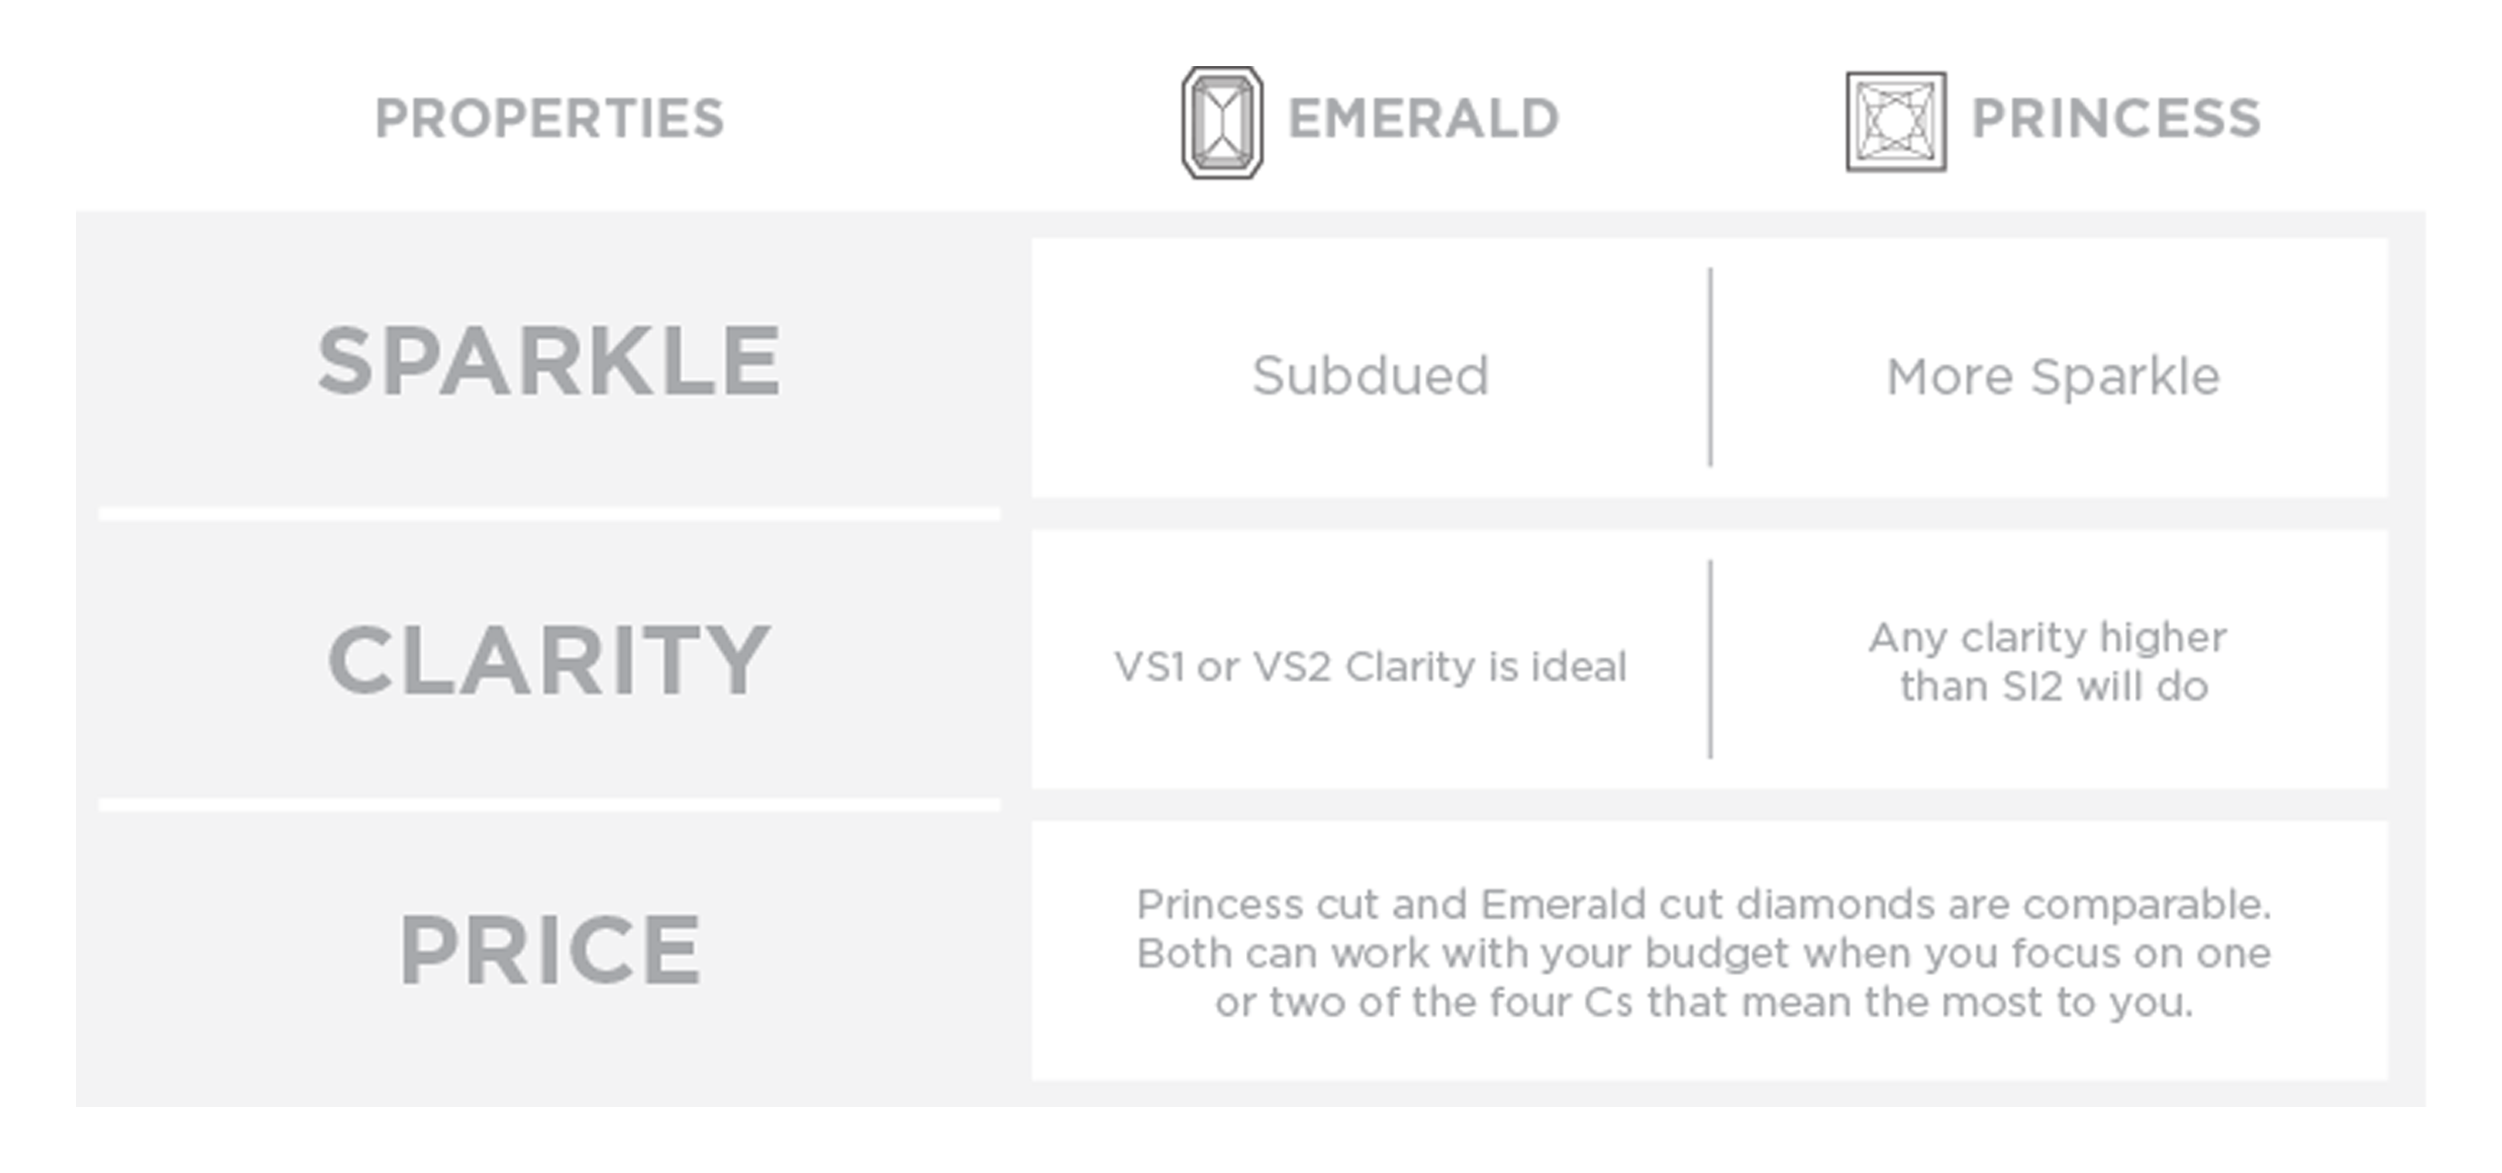 A chart comparing emerald and princess cut diamonds